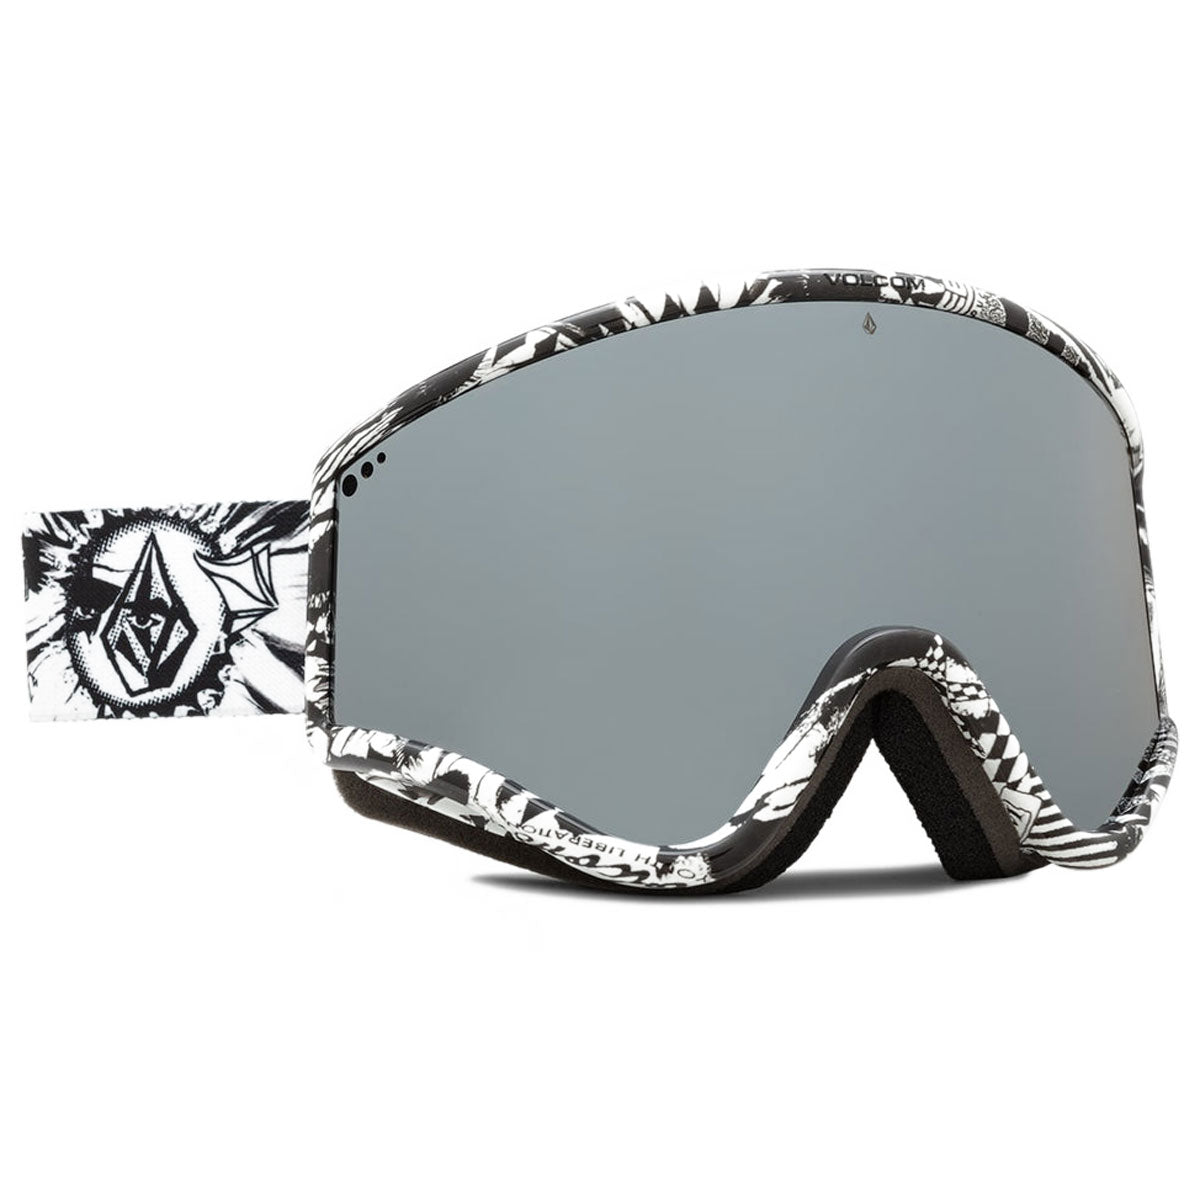 Volcom Yae Snowboard Goggles - OP Art/Silver Chrome image 3